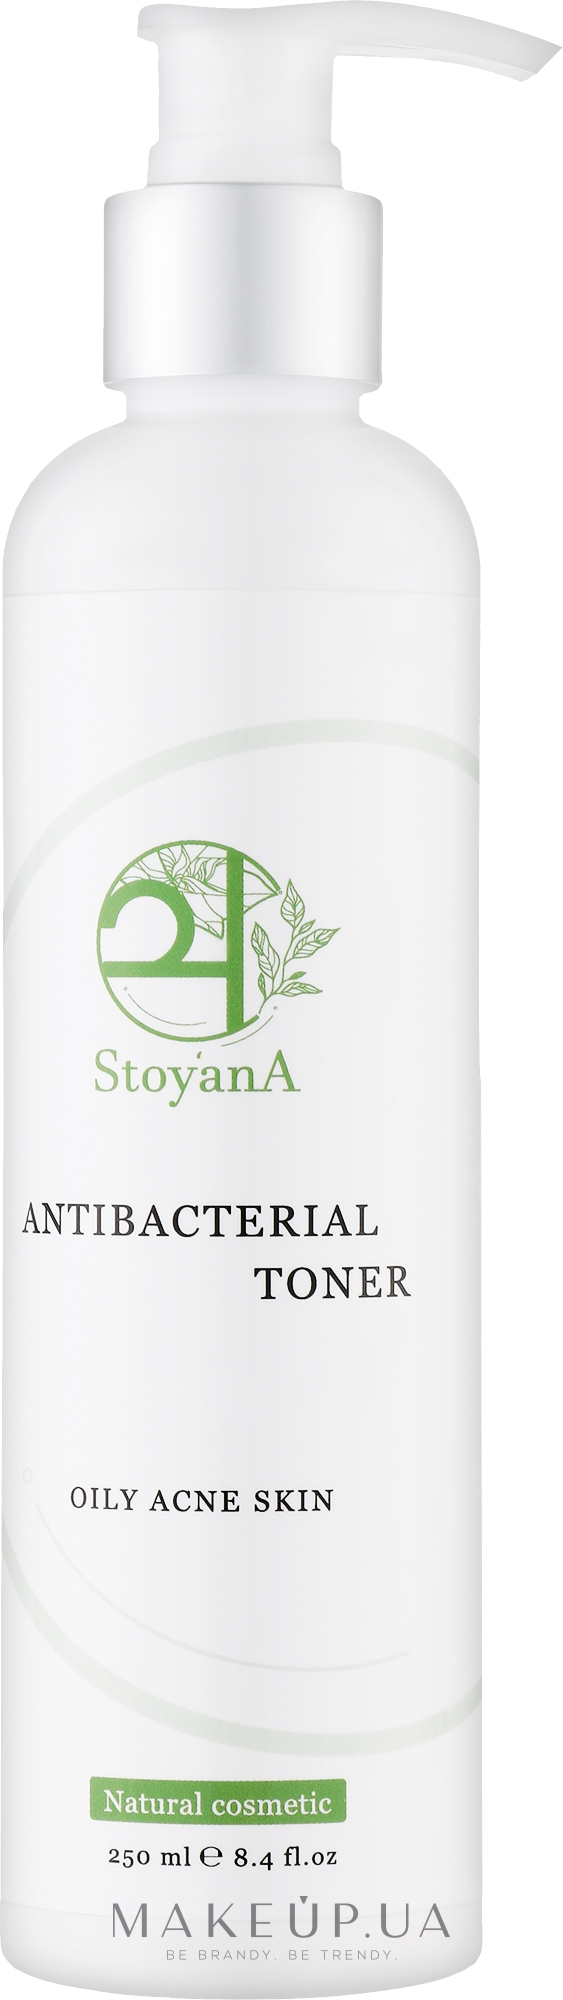 Антибактериальный тонер для лица - StoyanA Antibacterial Toner Oily Acne Skin — фото 250ml